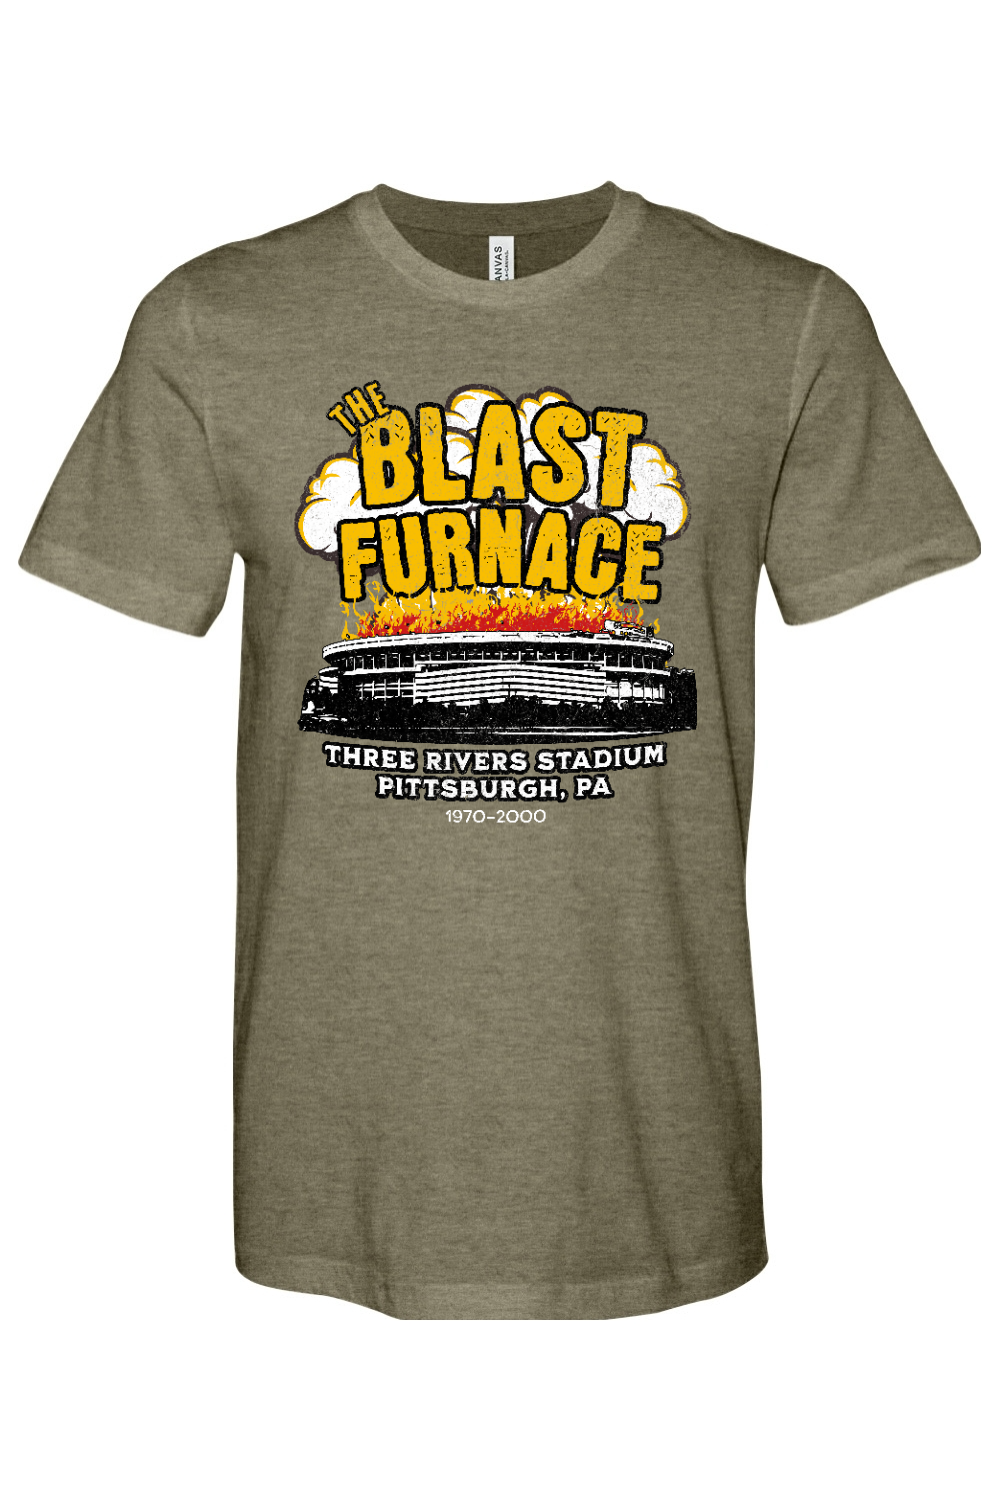 The Blast Furnace - Three Rivers Stadium - Yinzylvania